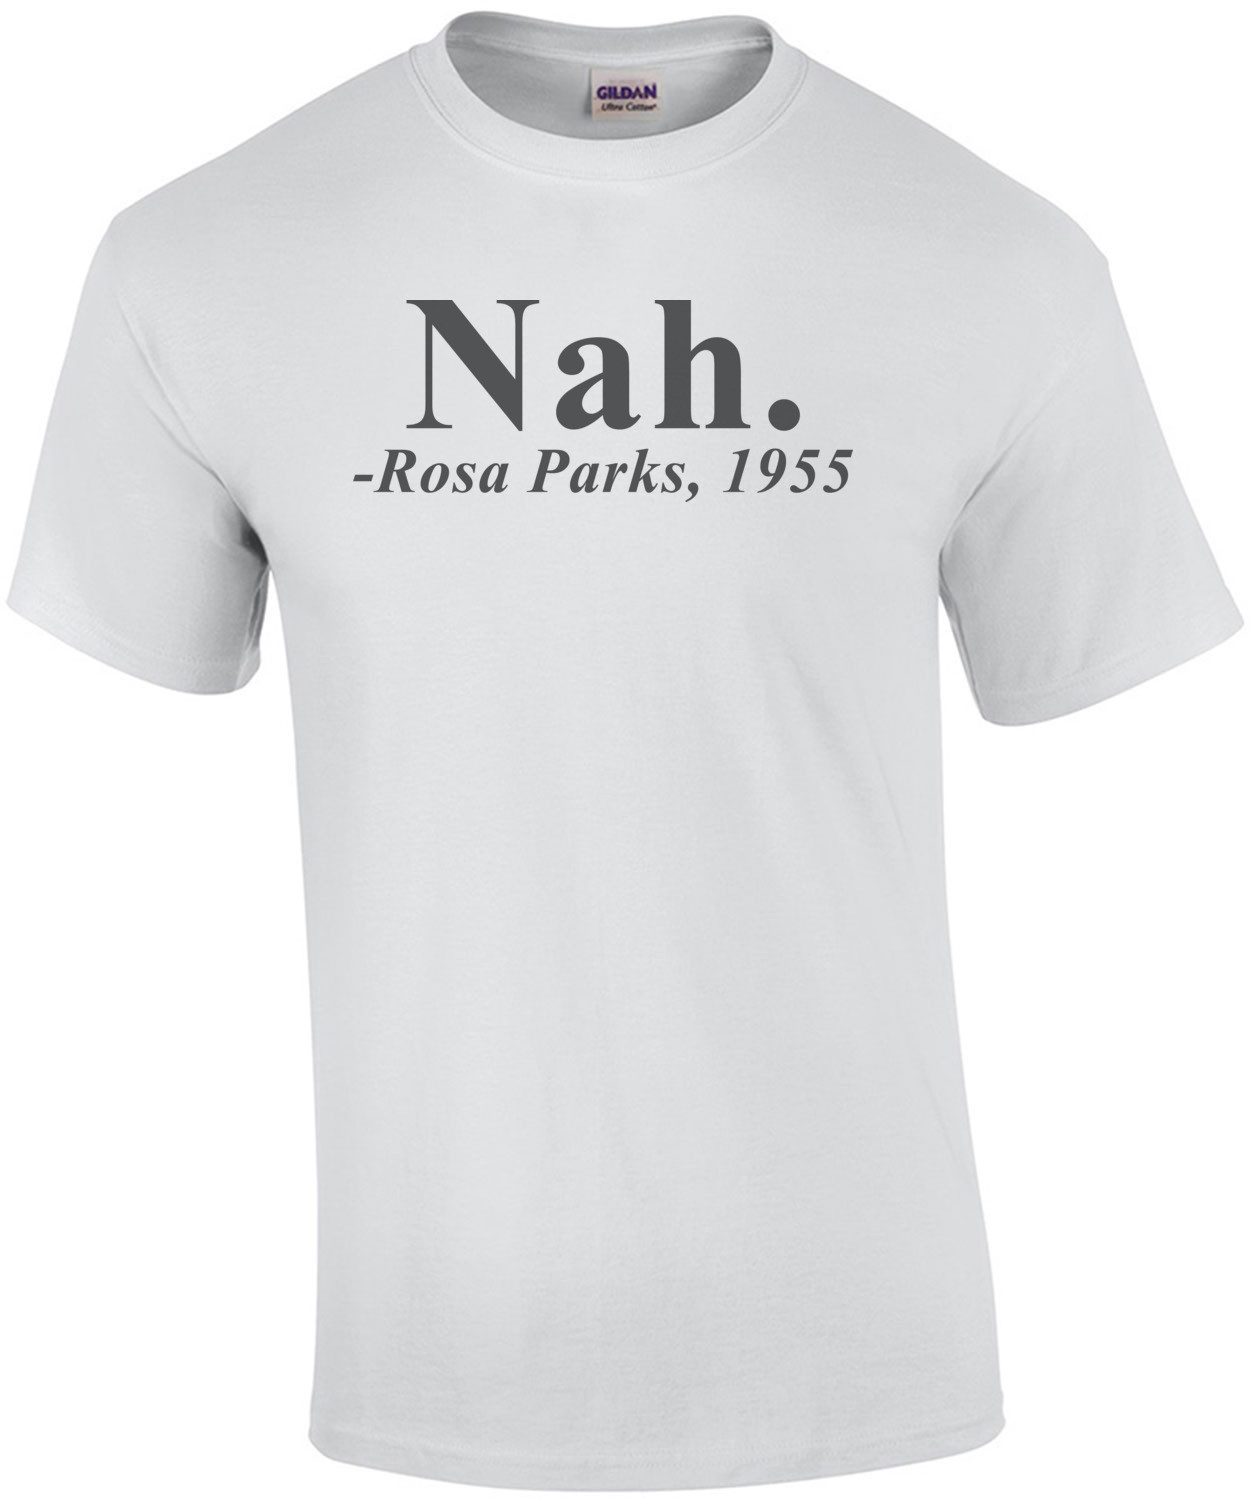 Nah - Rosa Parks Quote Shirt